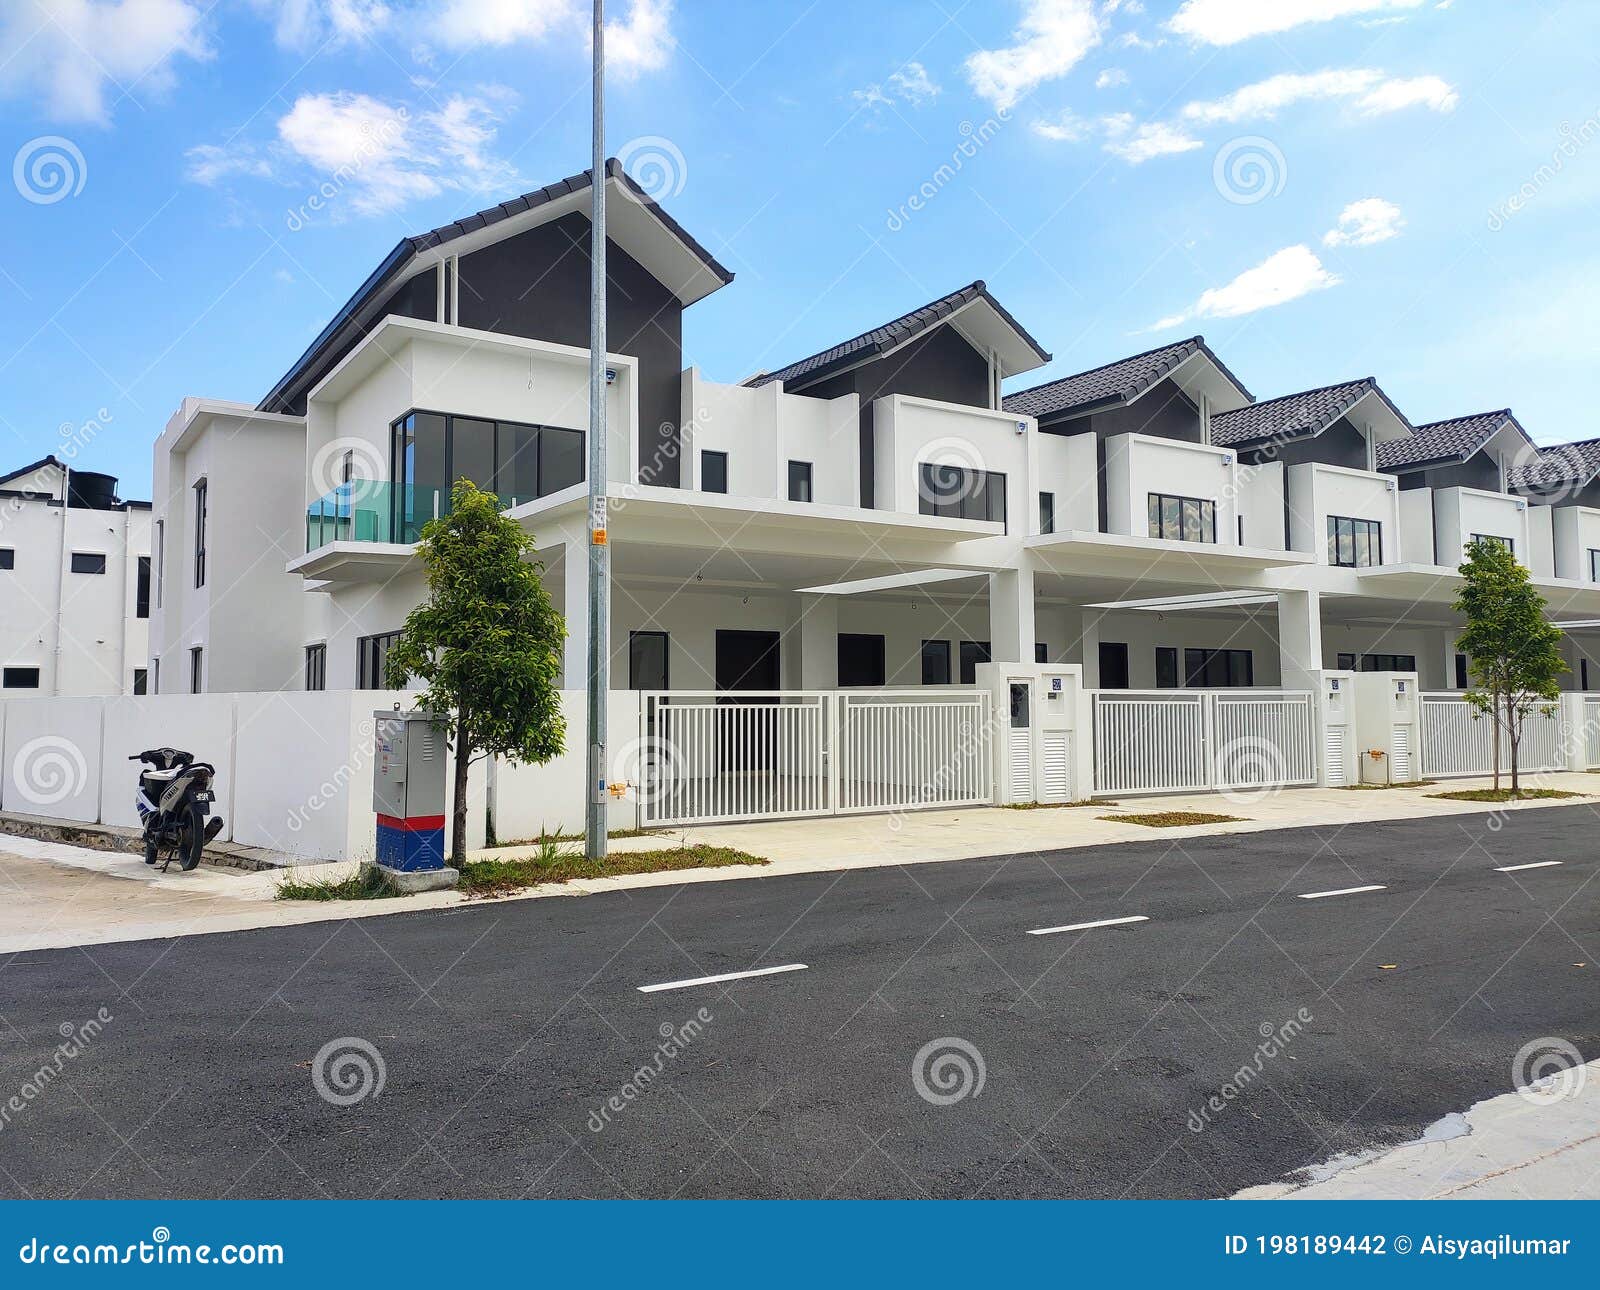 Terrace House Malaysia - Aidanctzx